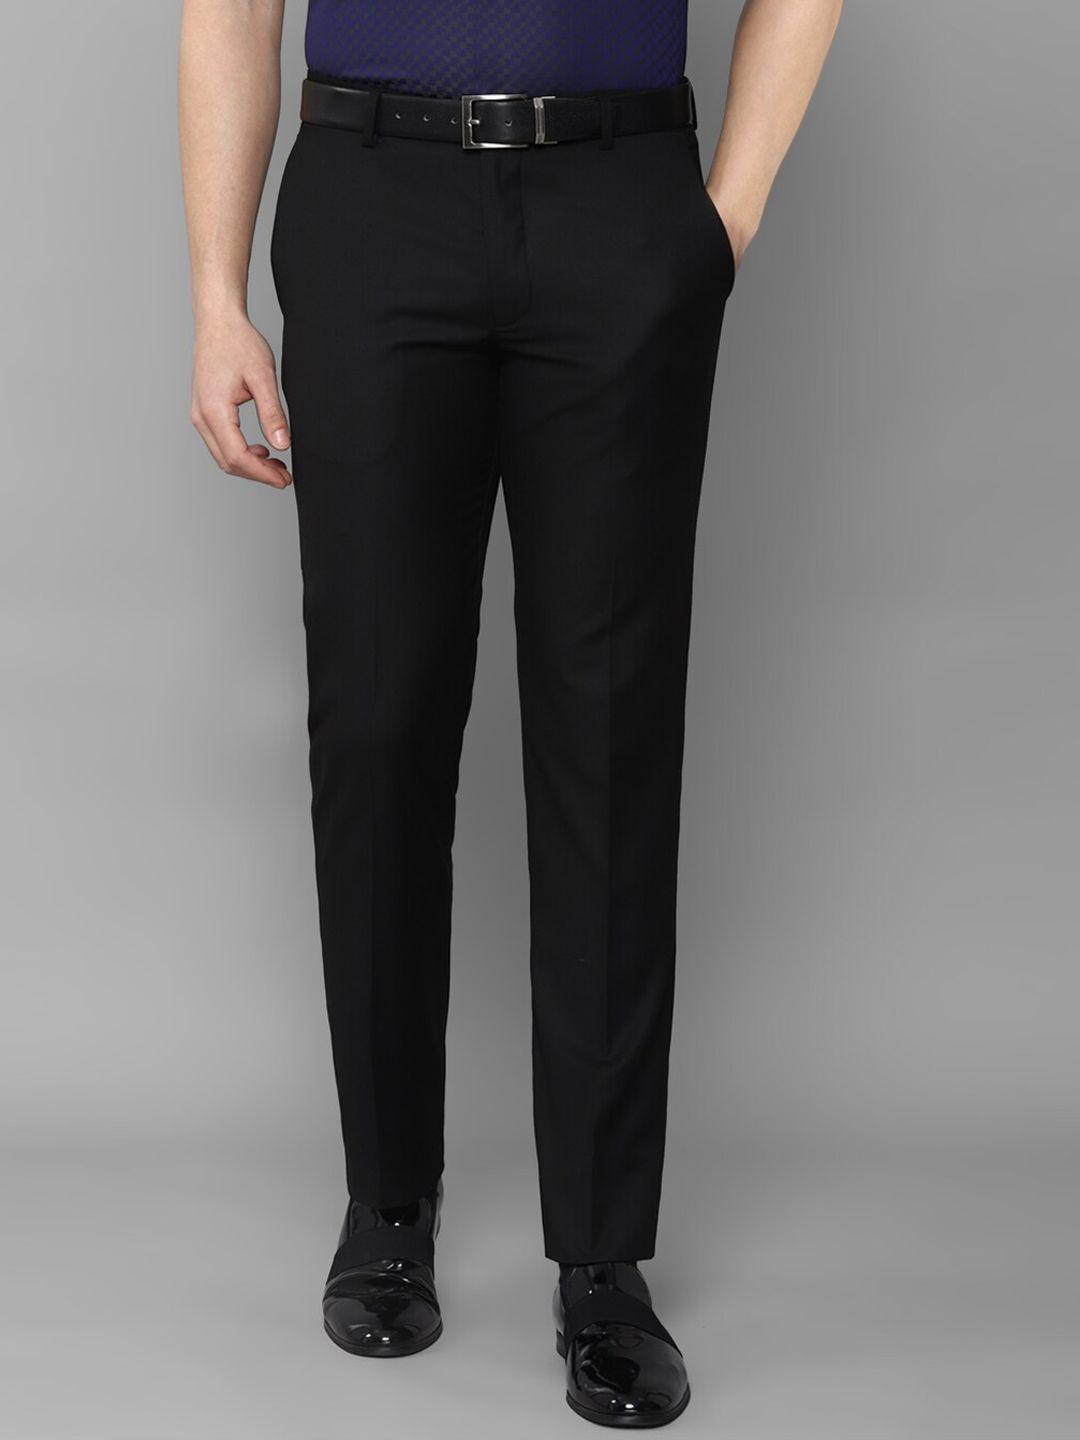 louis-philippe-men-black-slim-fit-trousers